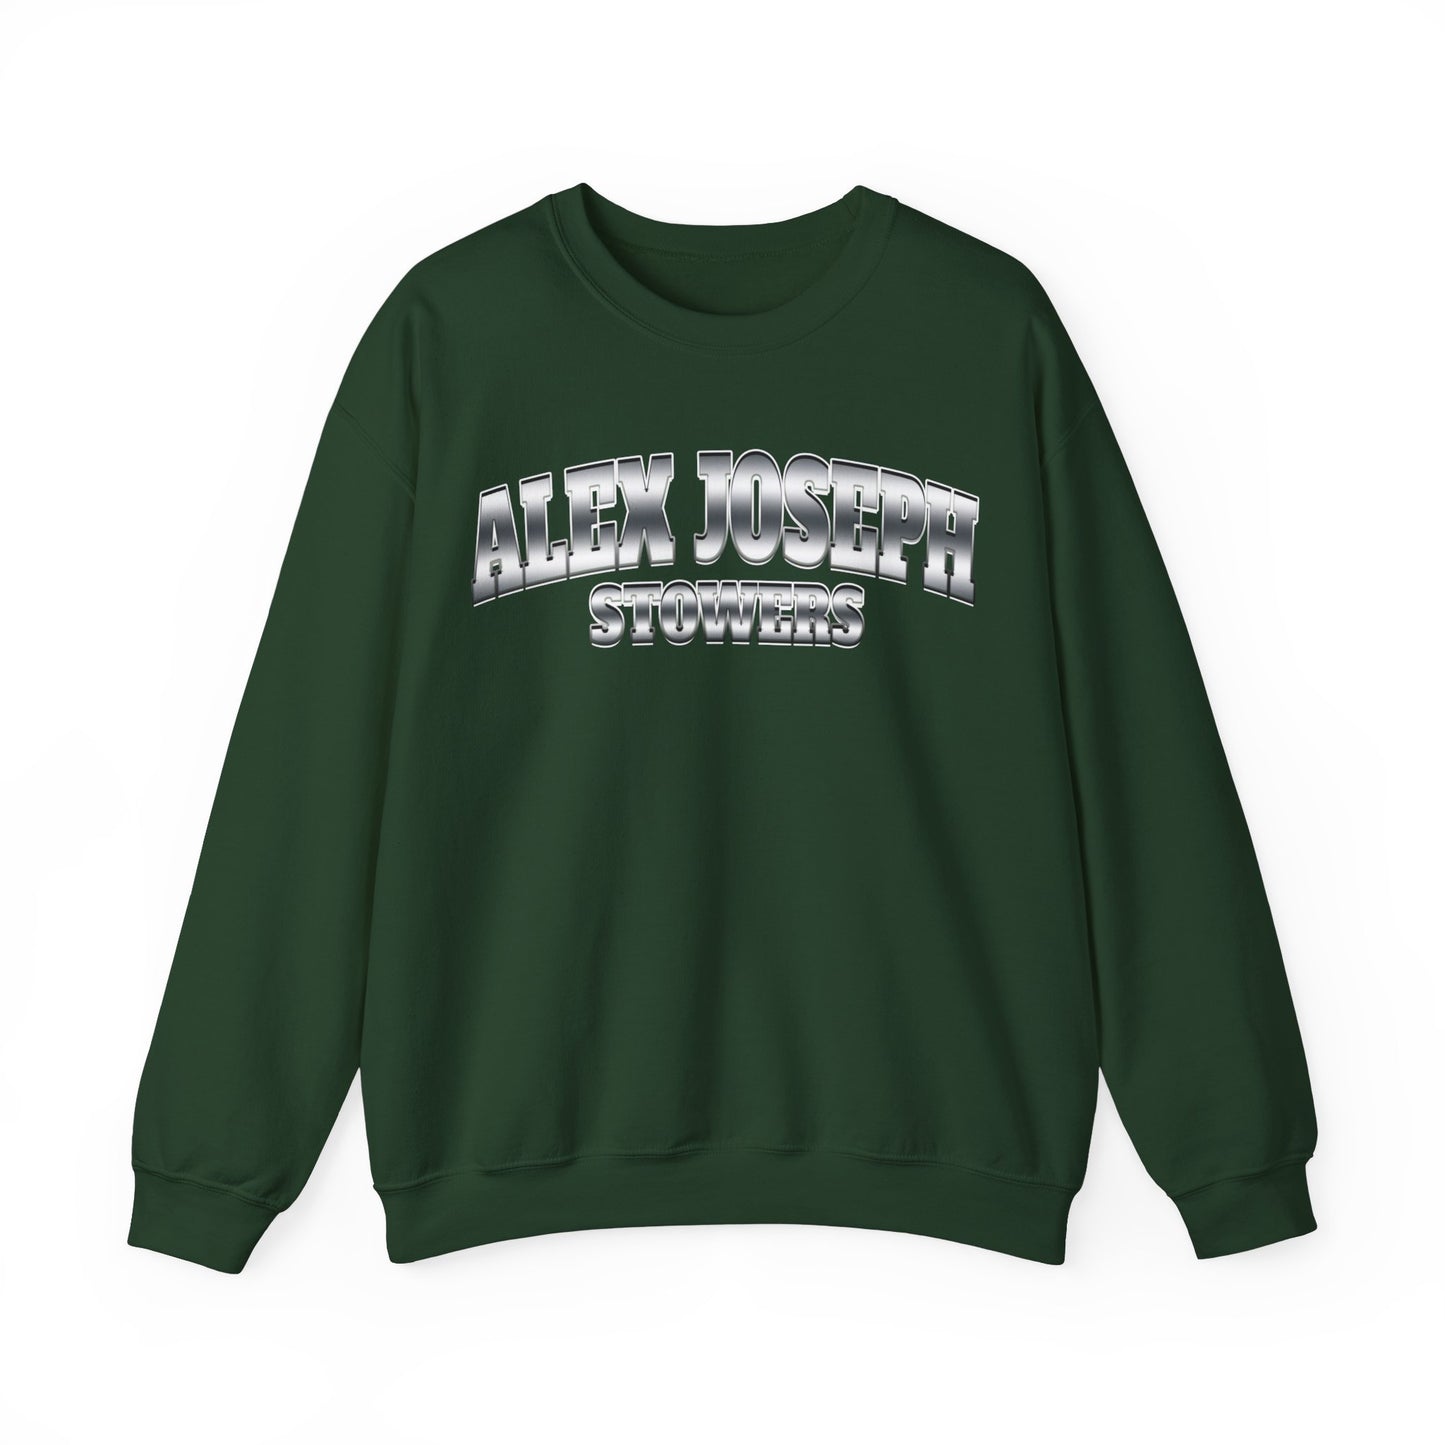 Alex Joseph Stowers Crewneck Sweatshirt